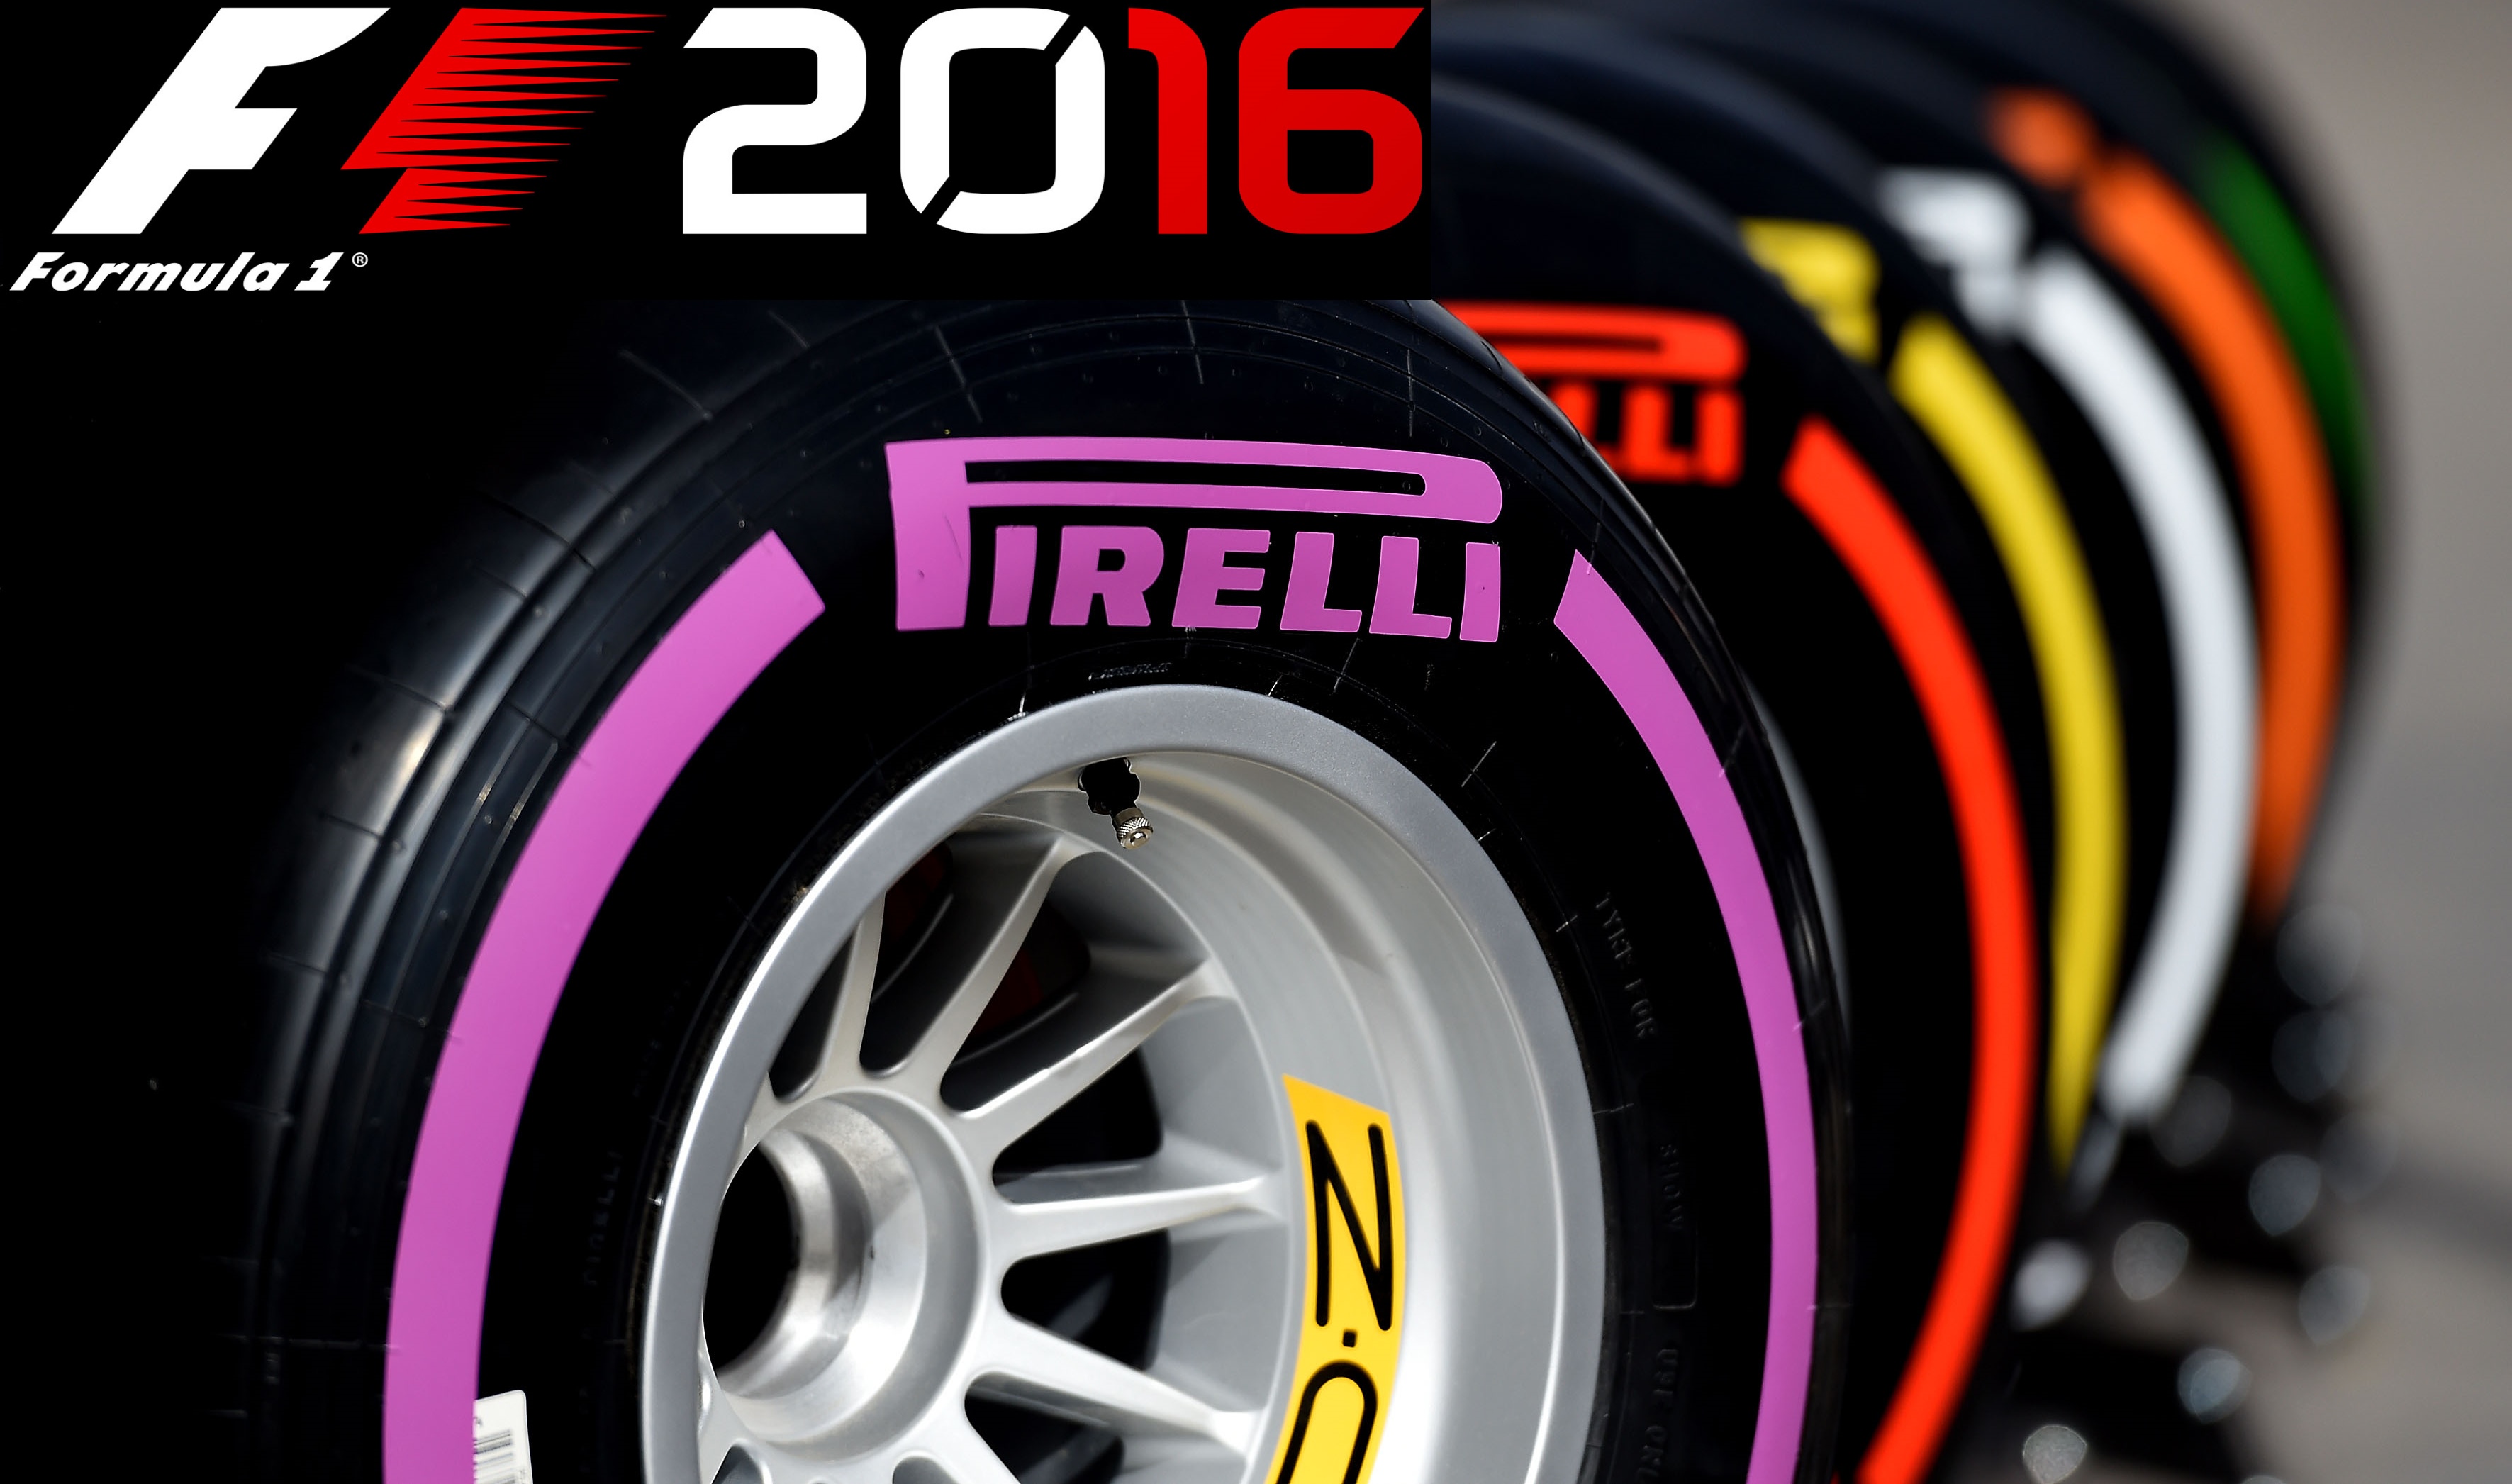 2016 Pirelli tire color line-up.jpg